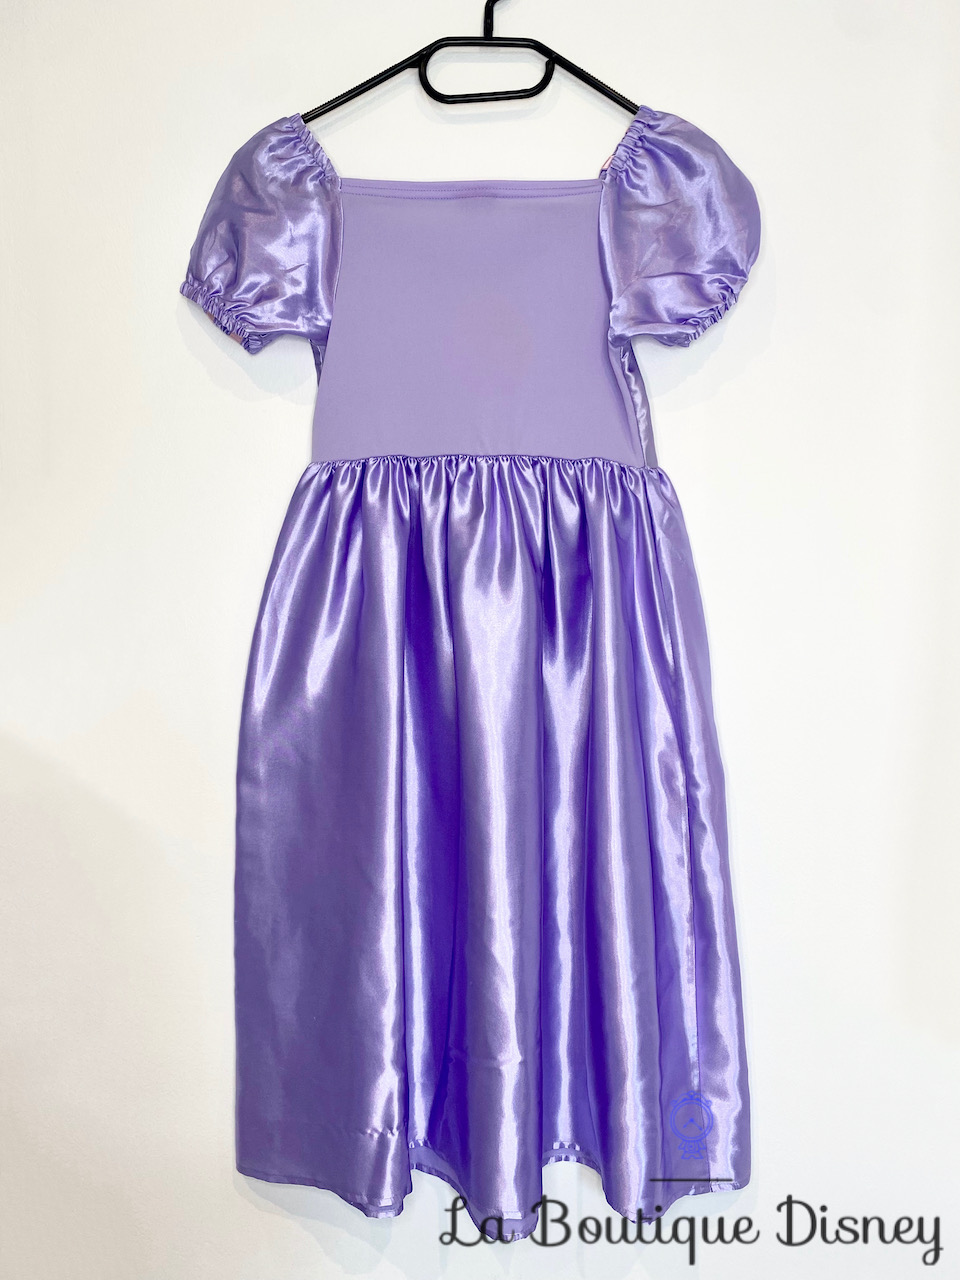 déguisement-raiponce-disney-taille-5-6-ans-robe-princesse-violet-rubies-5